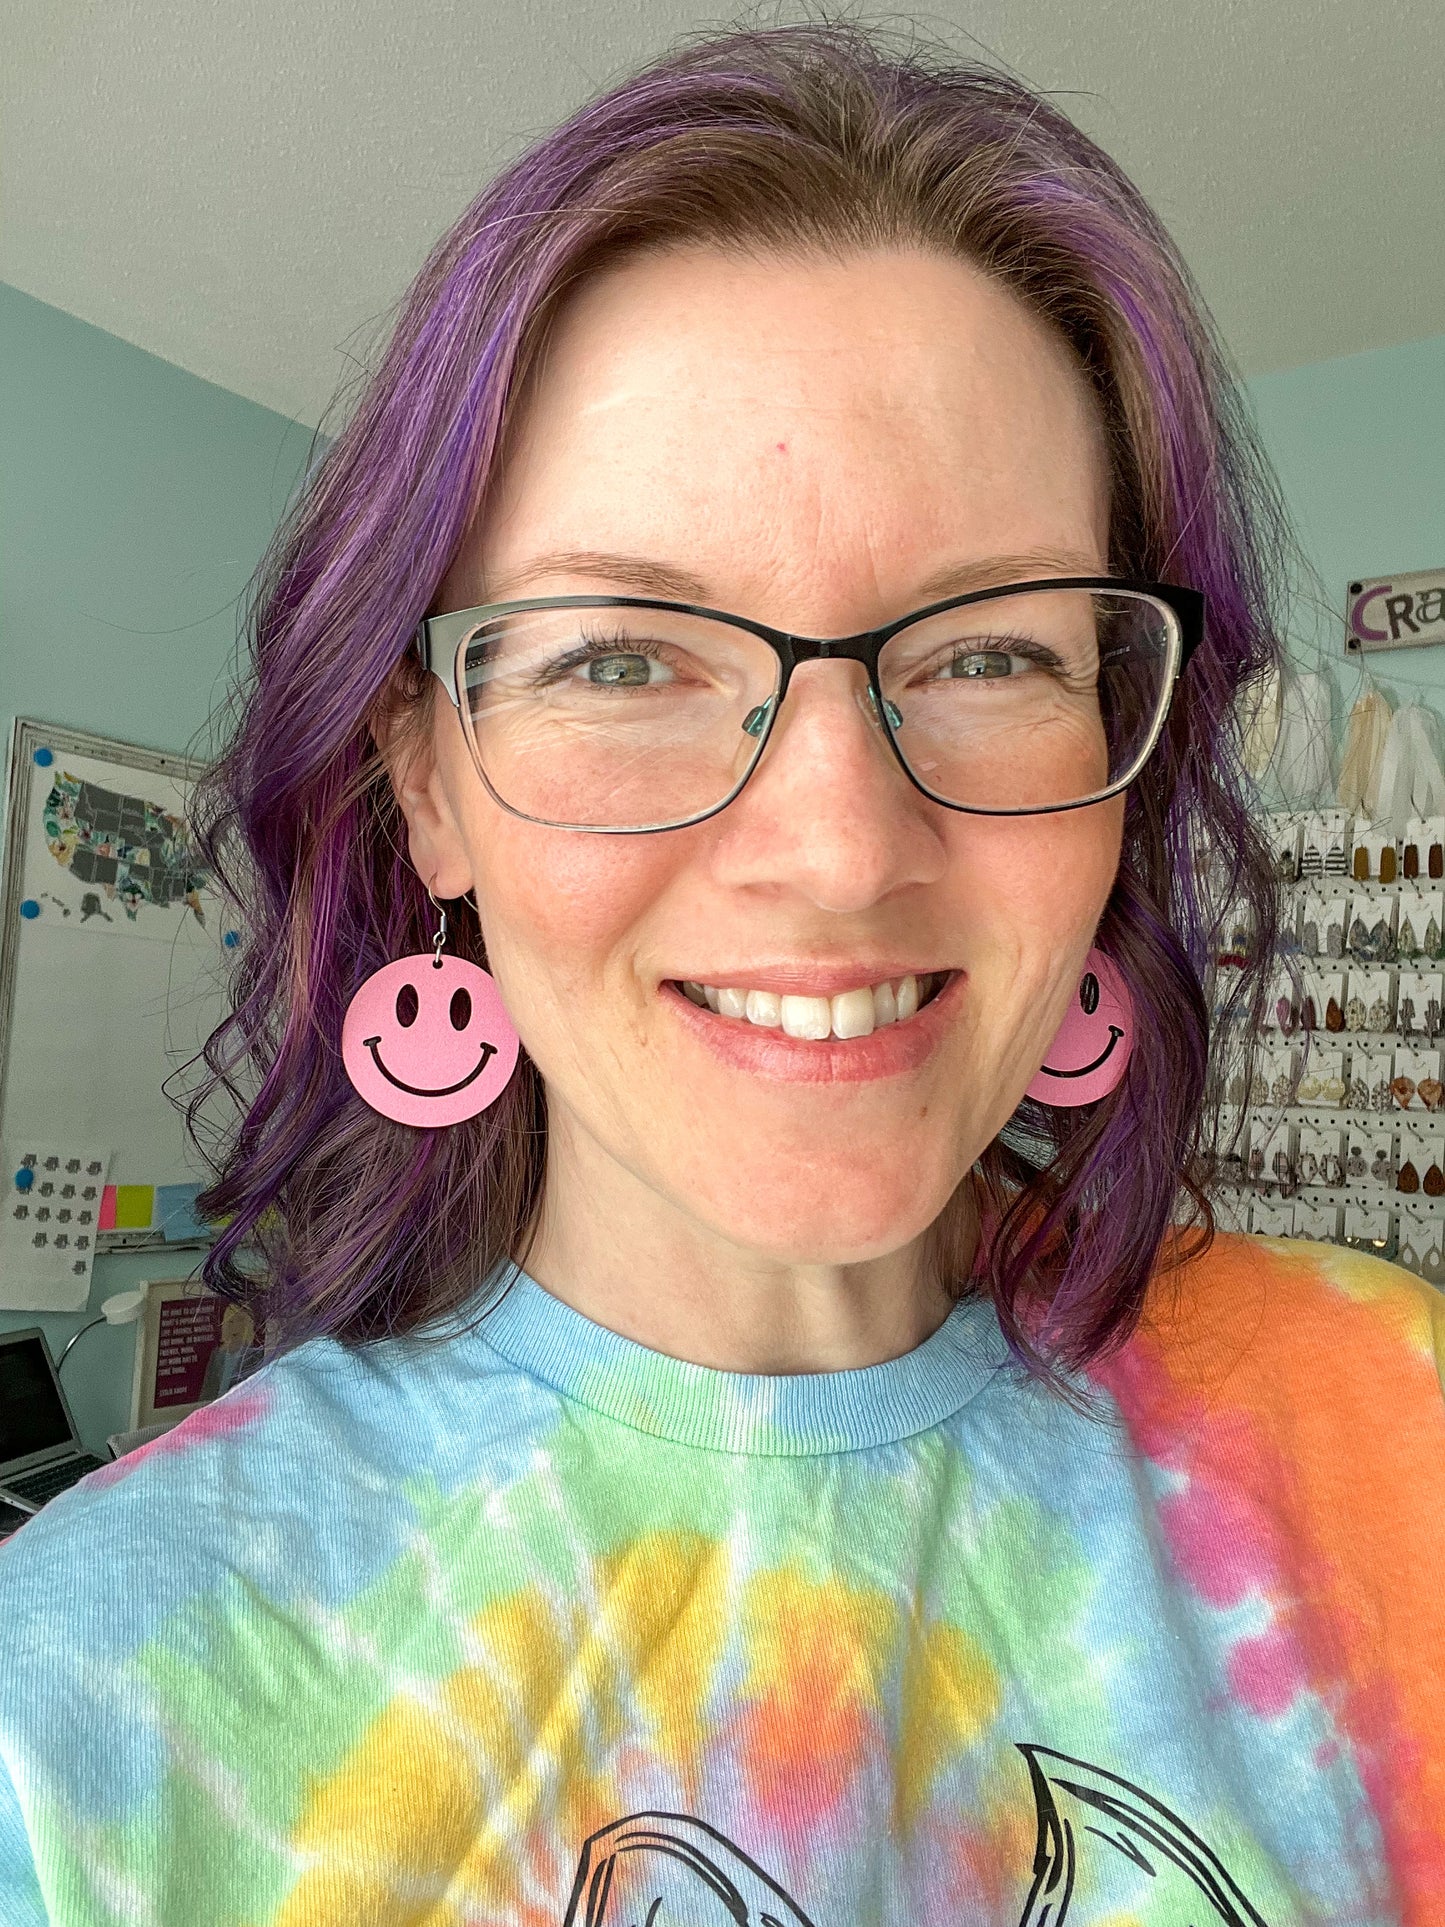 Light Pink Smile Wood Earrings